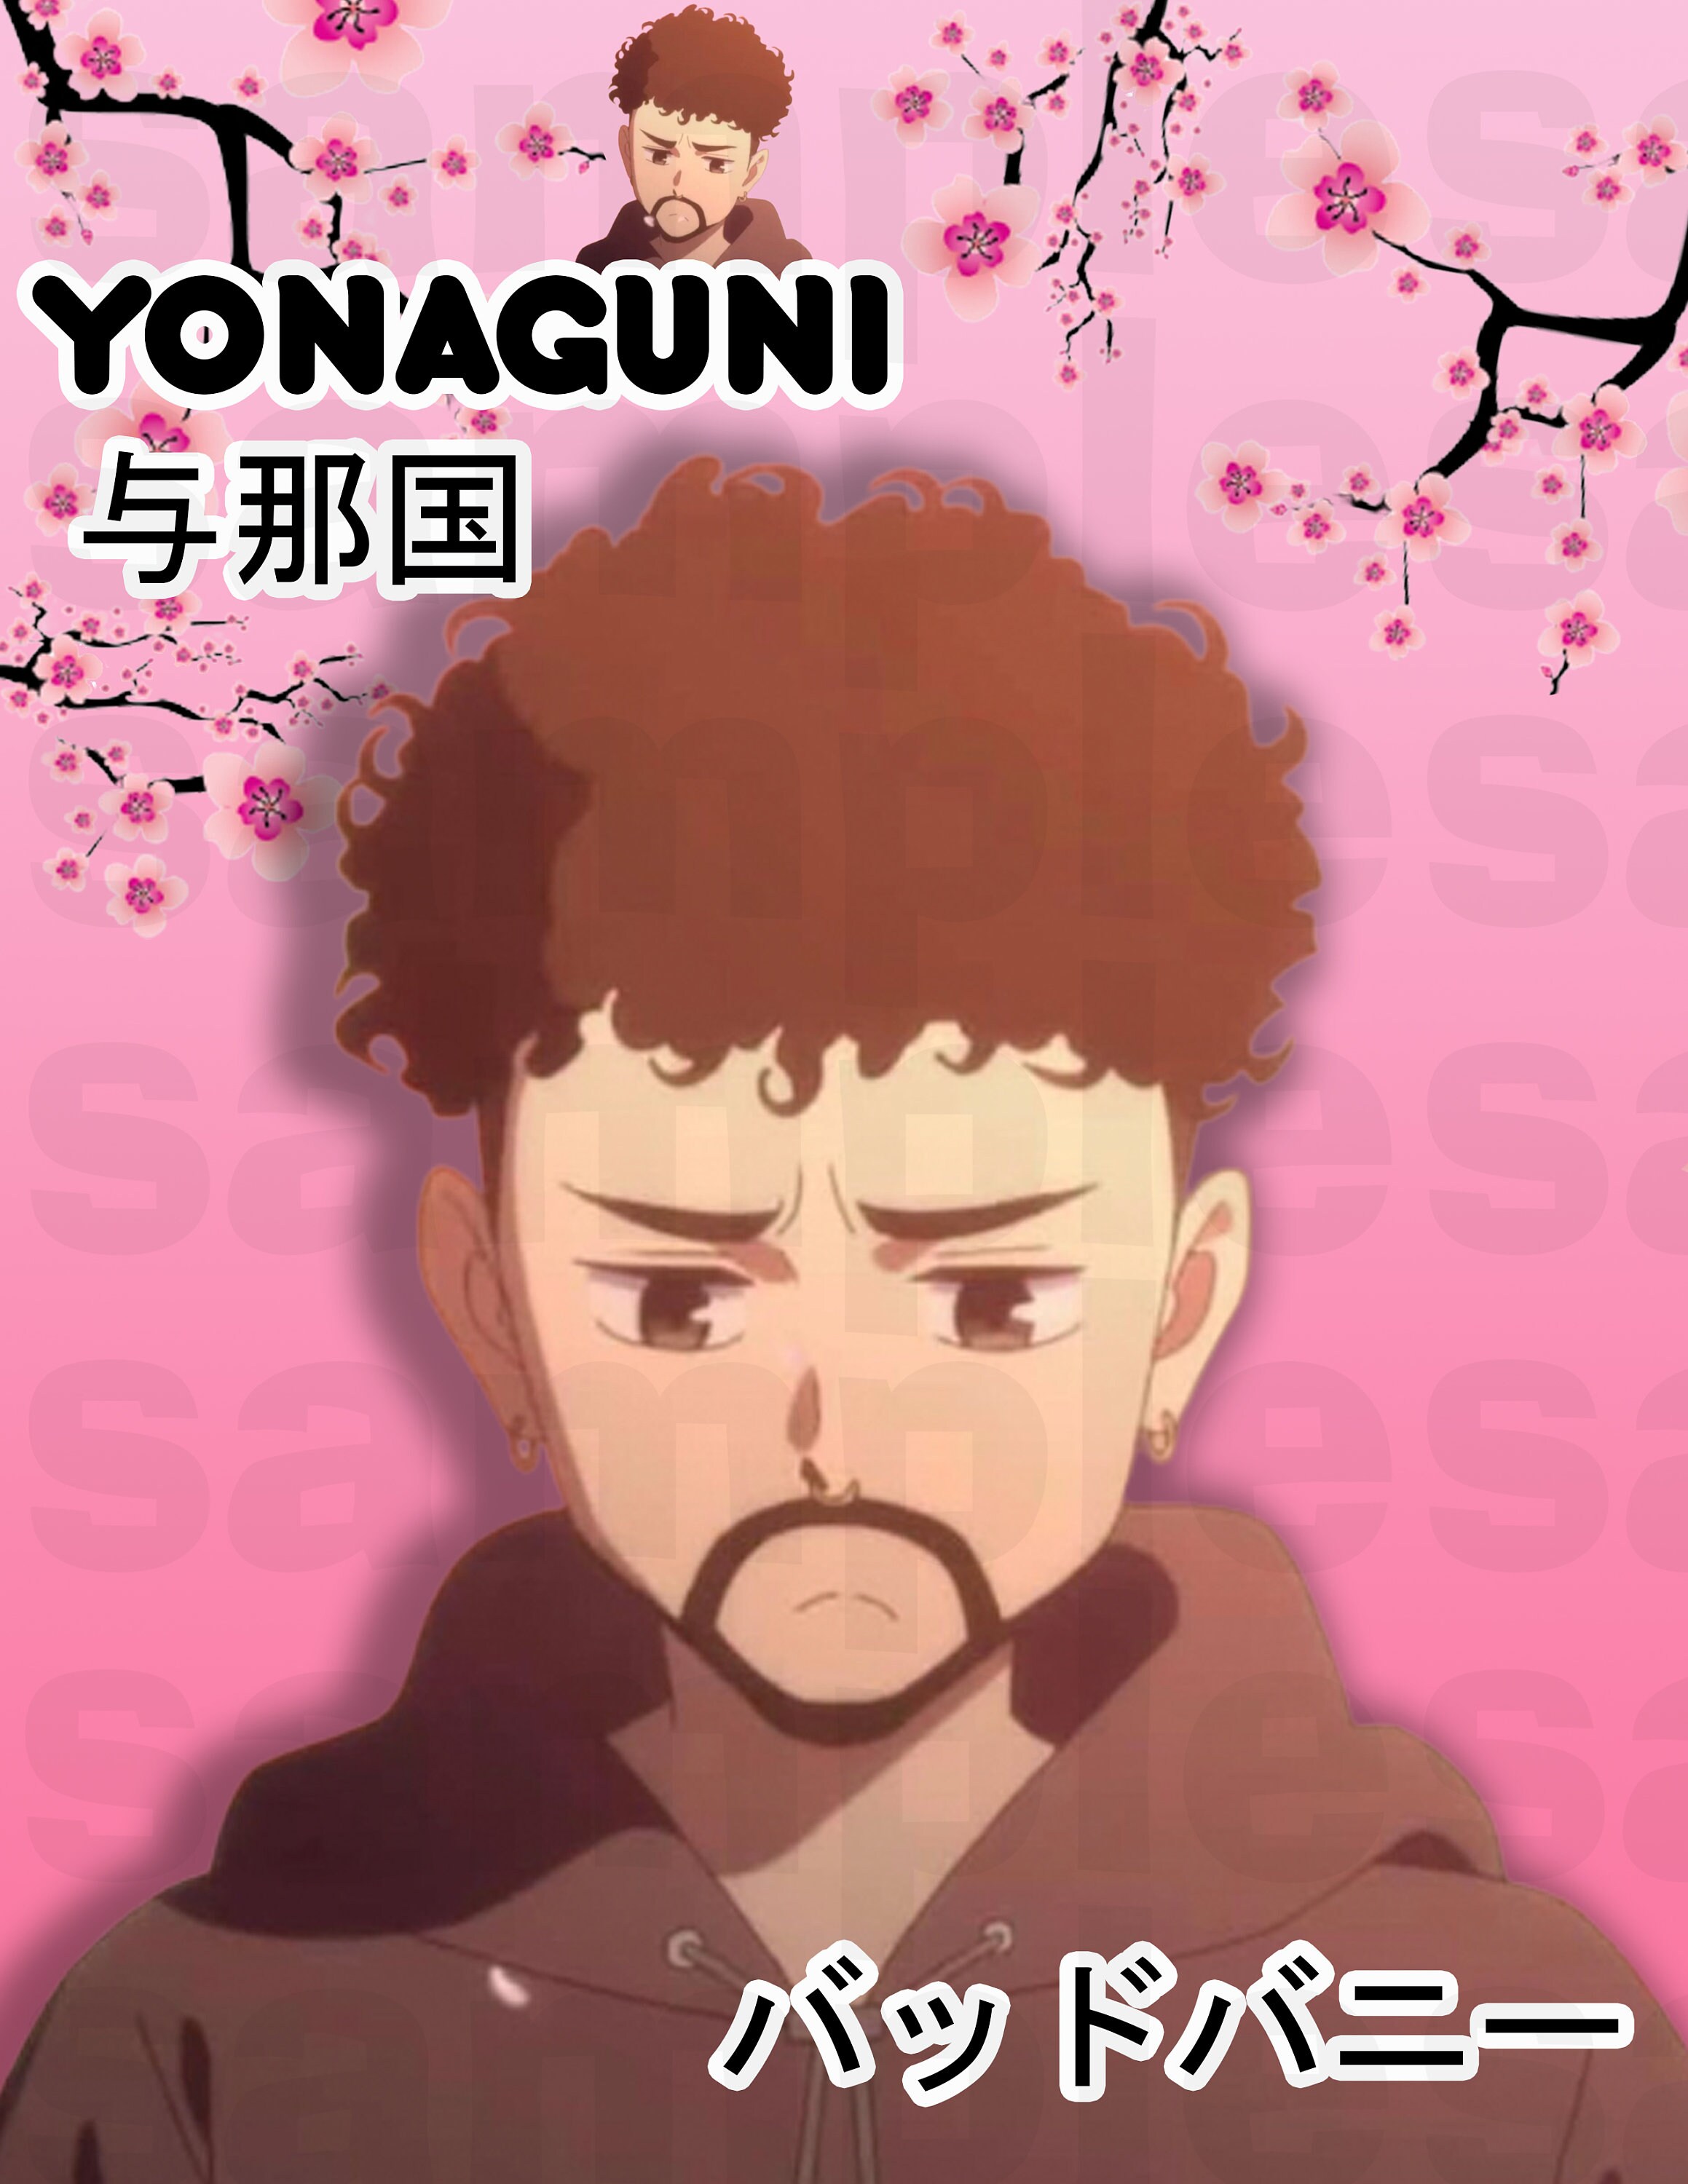 Yonaguni anime